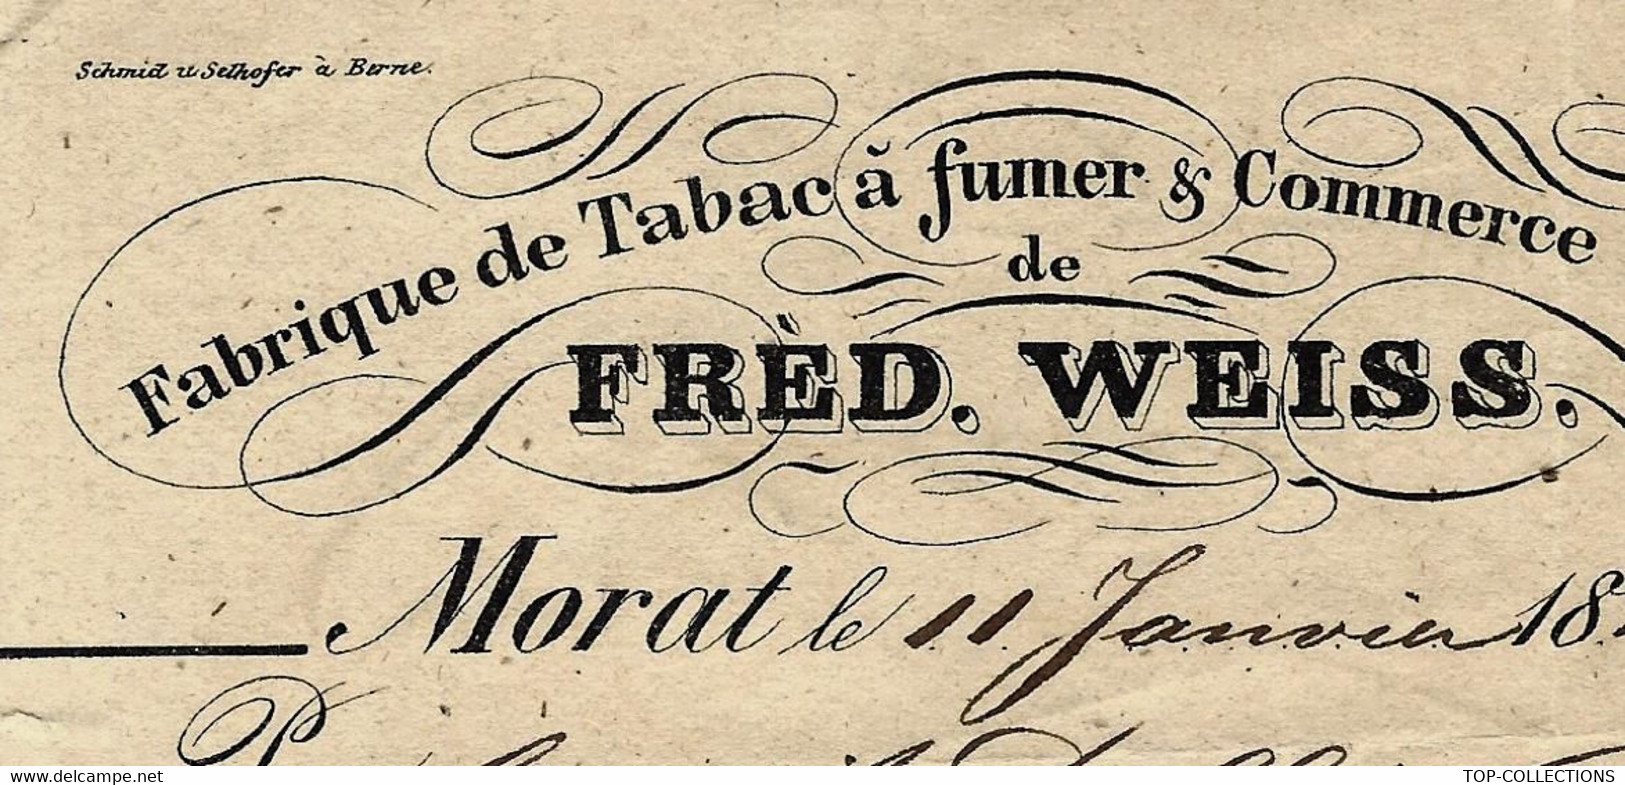 1840 FABRIQUE DE TABAC A FUMER FRED. WEISS à Morat Suisse - Schweiz